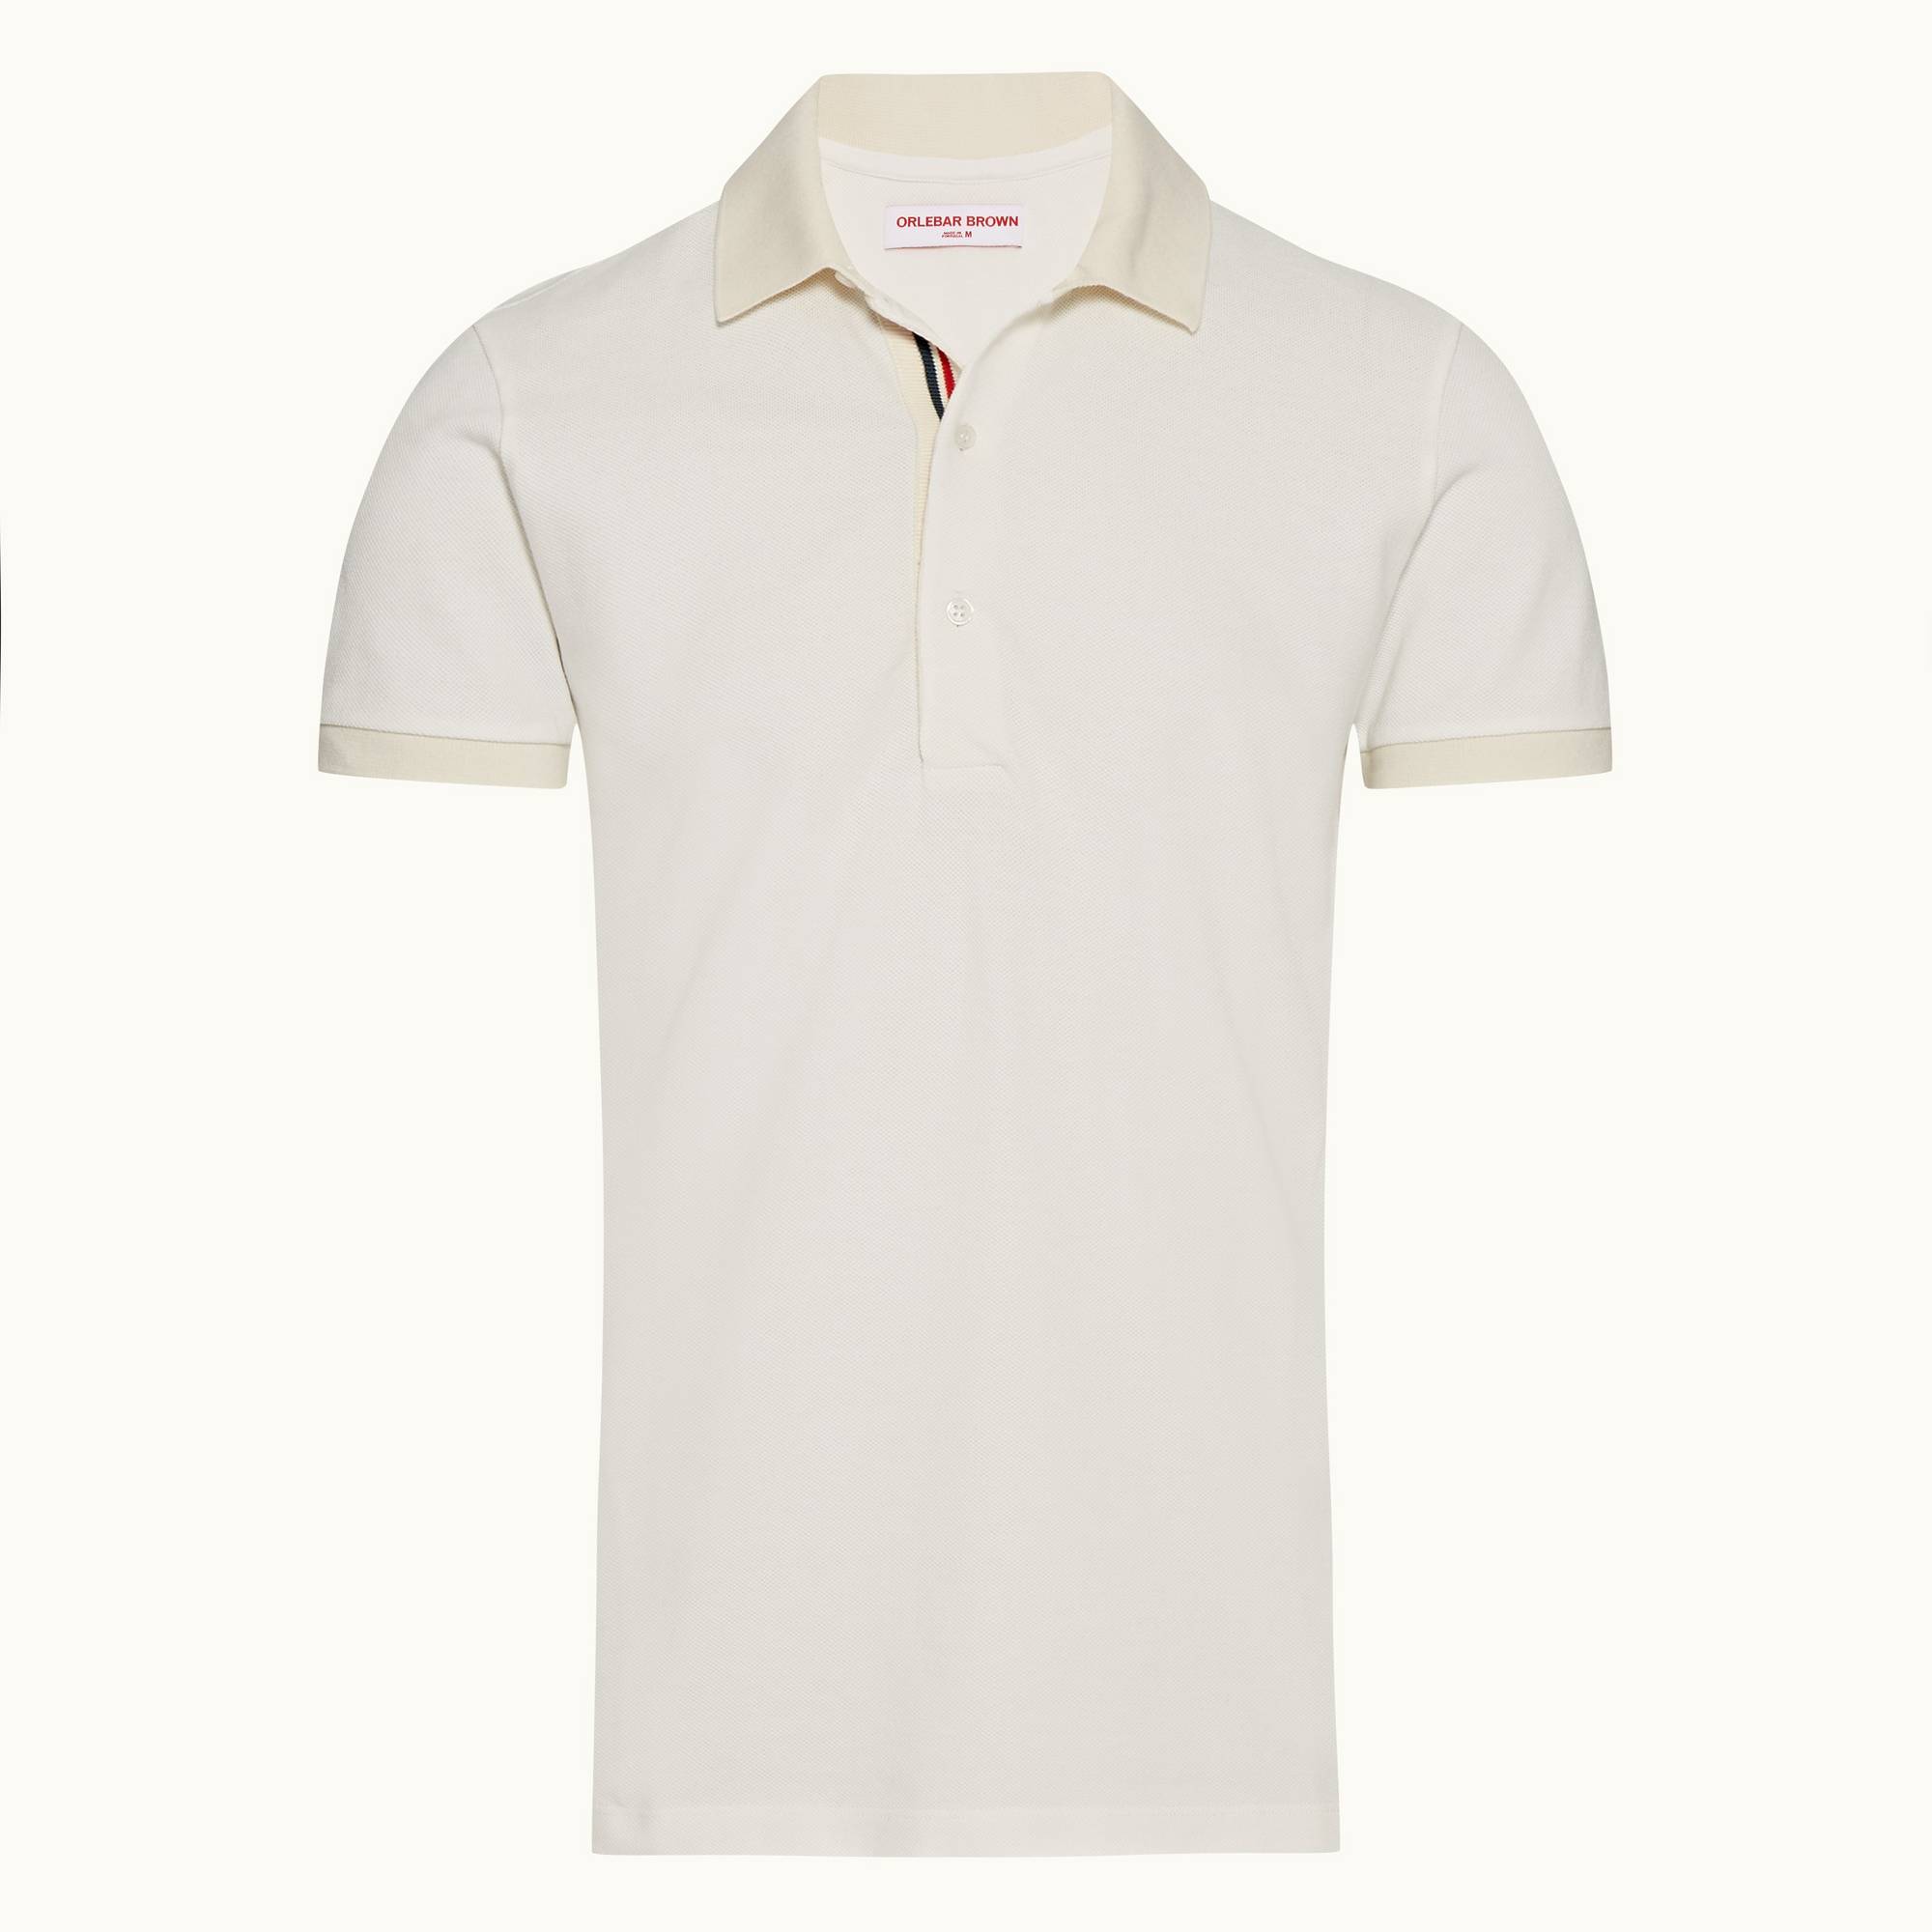 Whiteside - Mens White Sand O.B Stripe Organic Cotton Polo Shirt